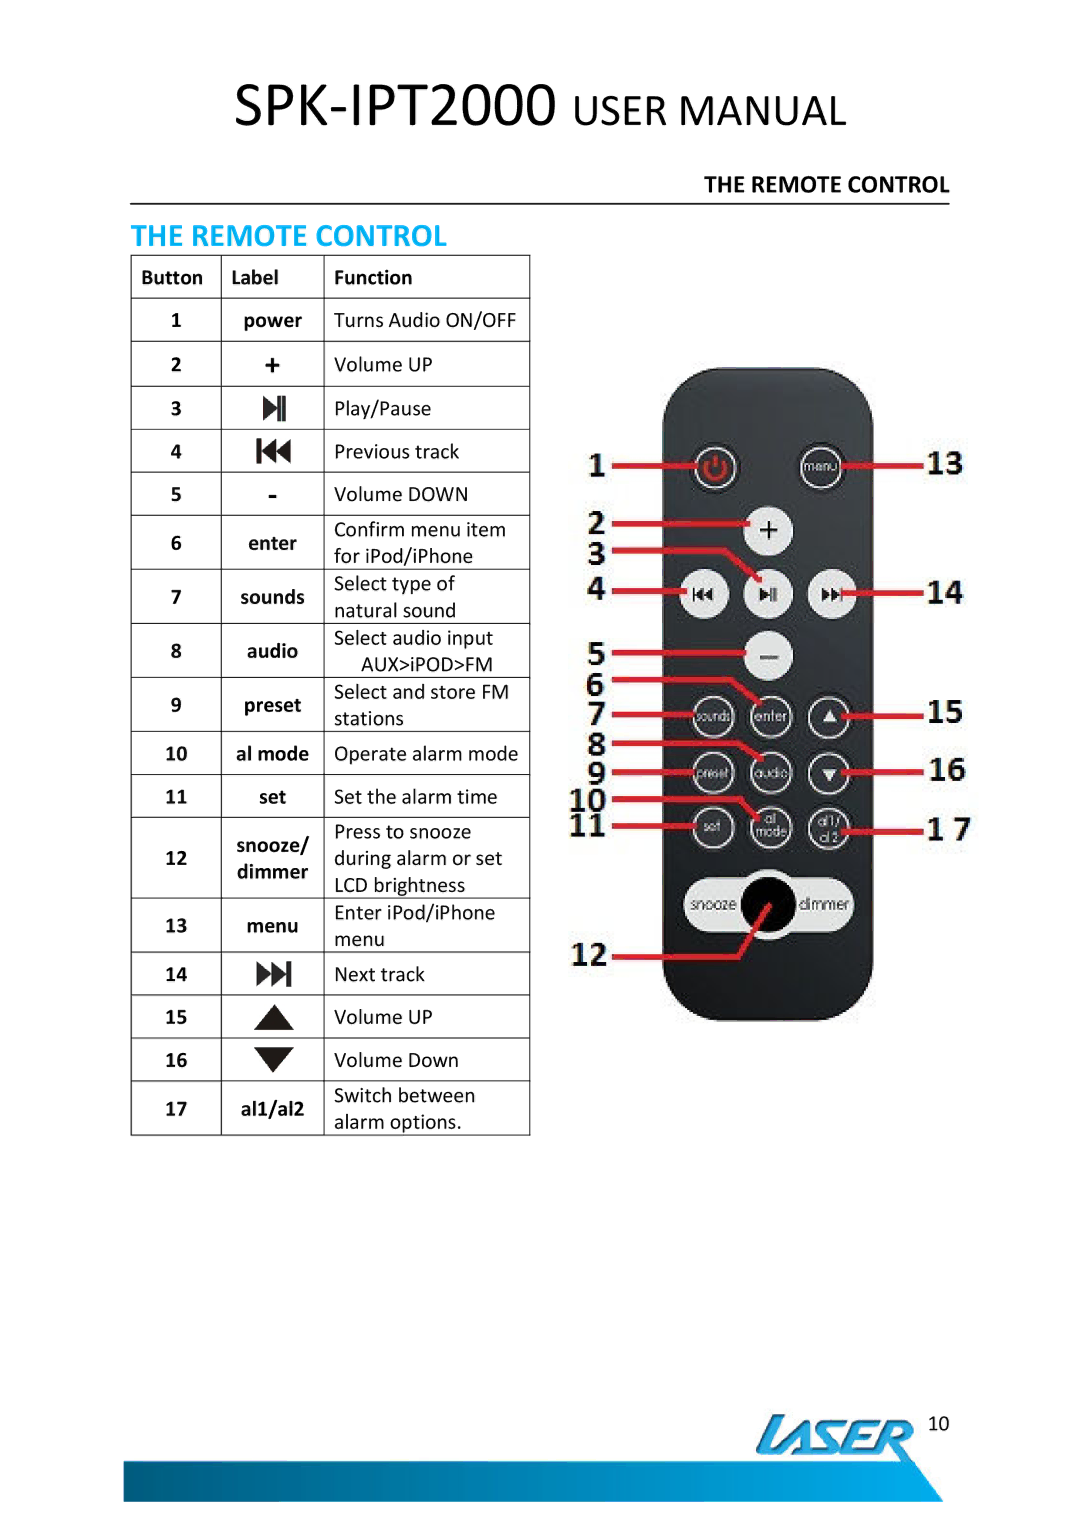 Laser SPK-IPT2000 user manual Remote Control, Button Label Function 